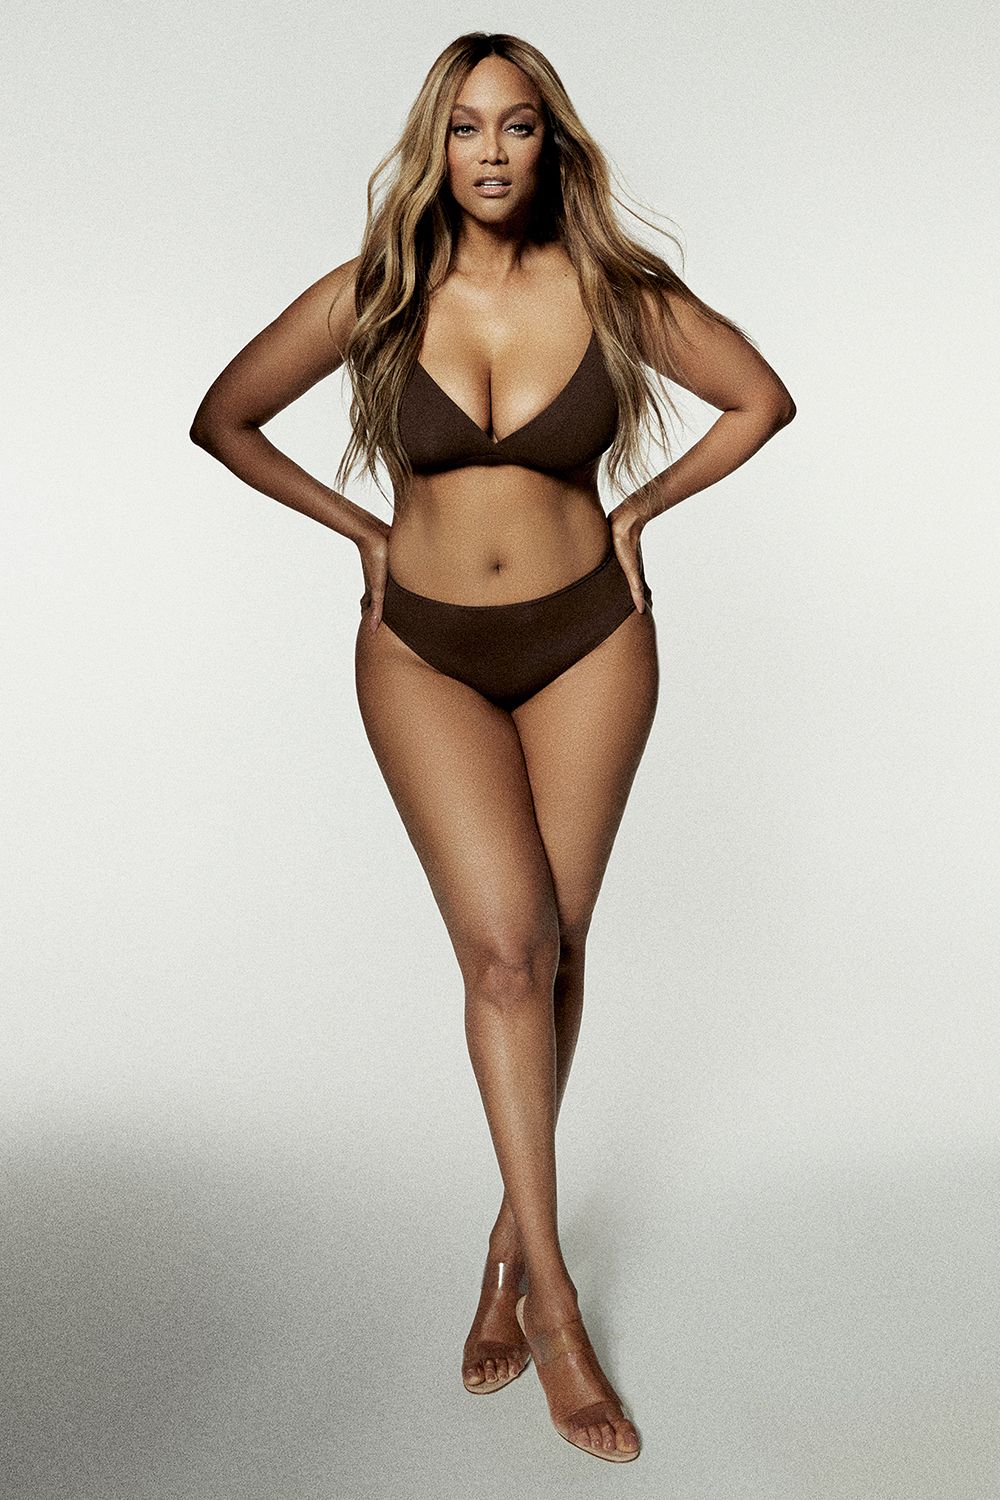 Kim Kardashian Stars in New Faux-Leather SKIMS Campaign